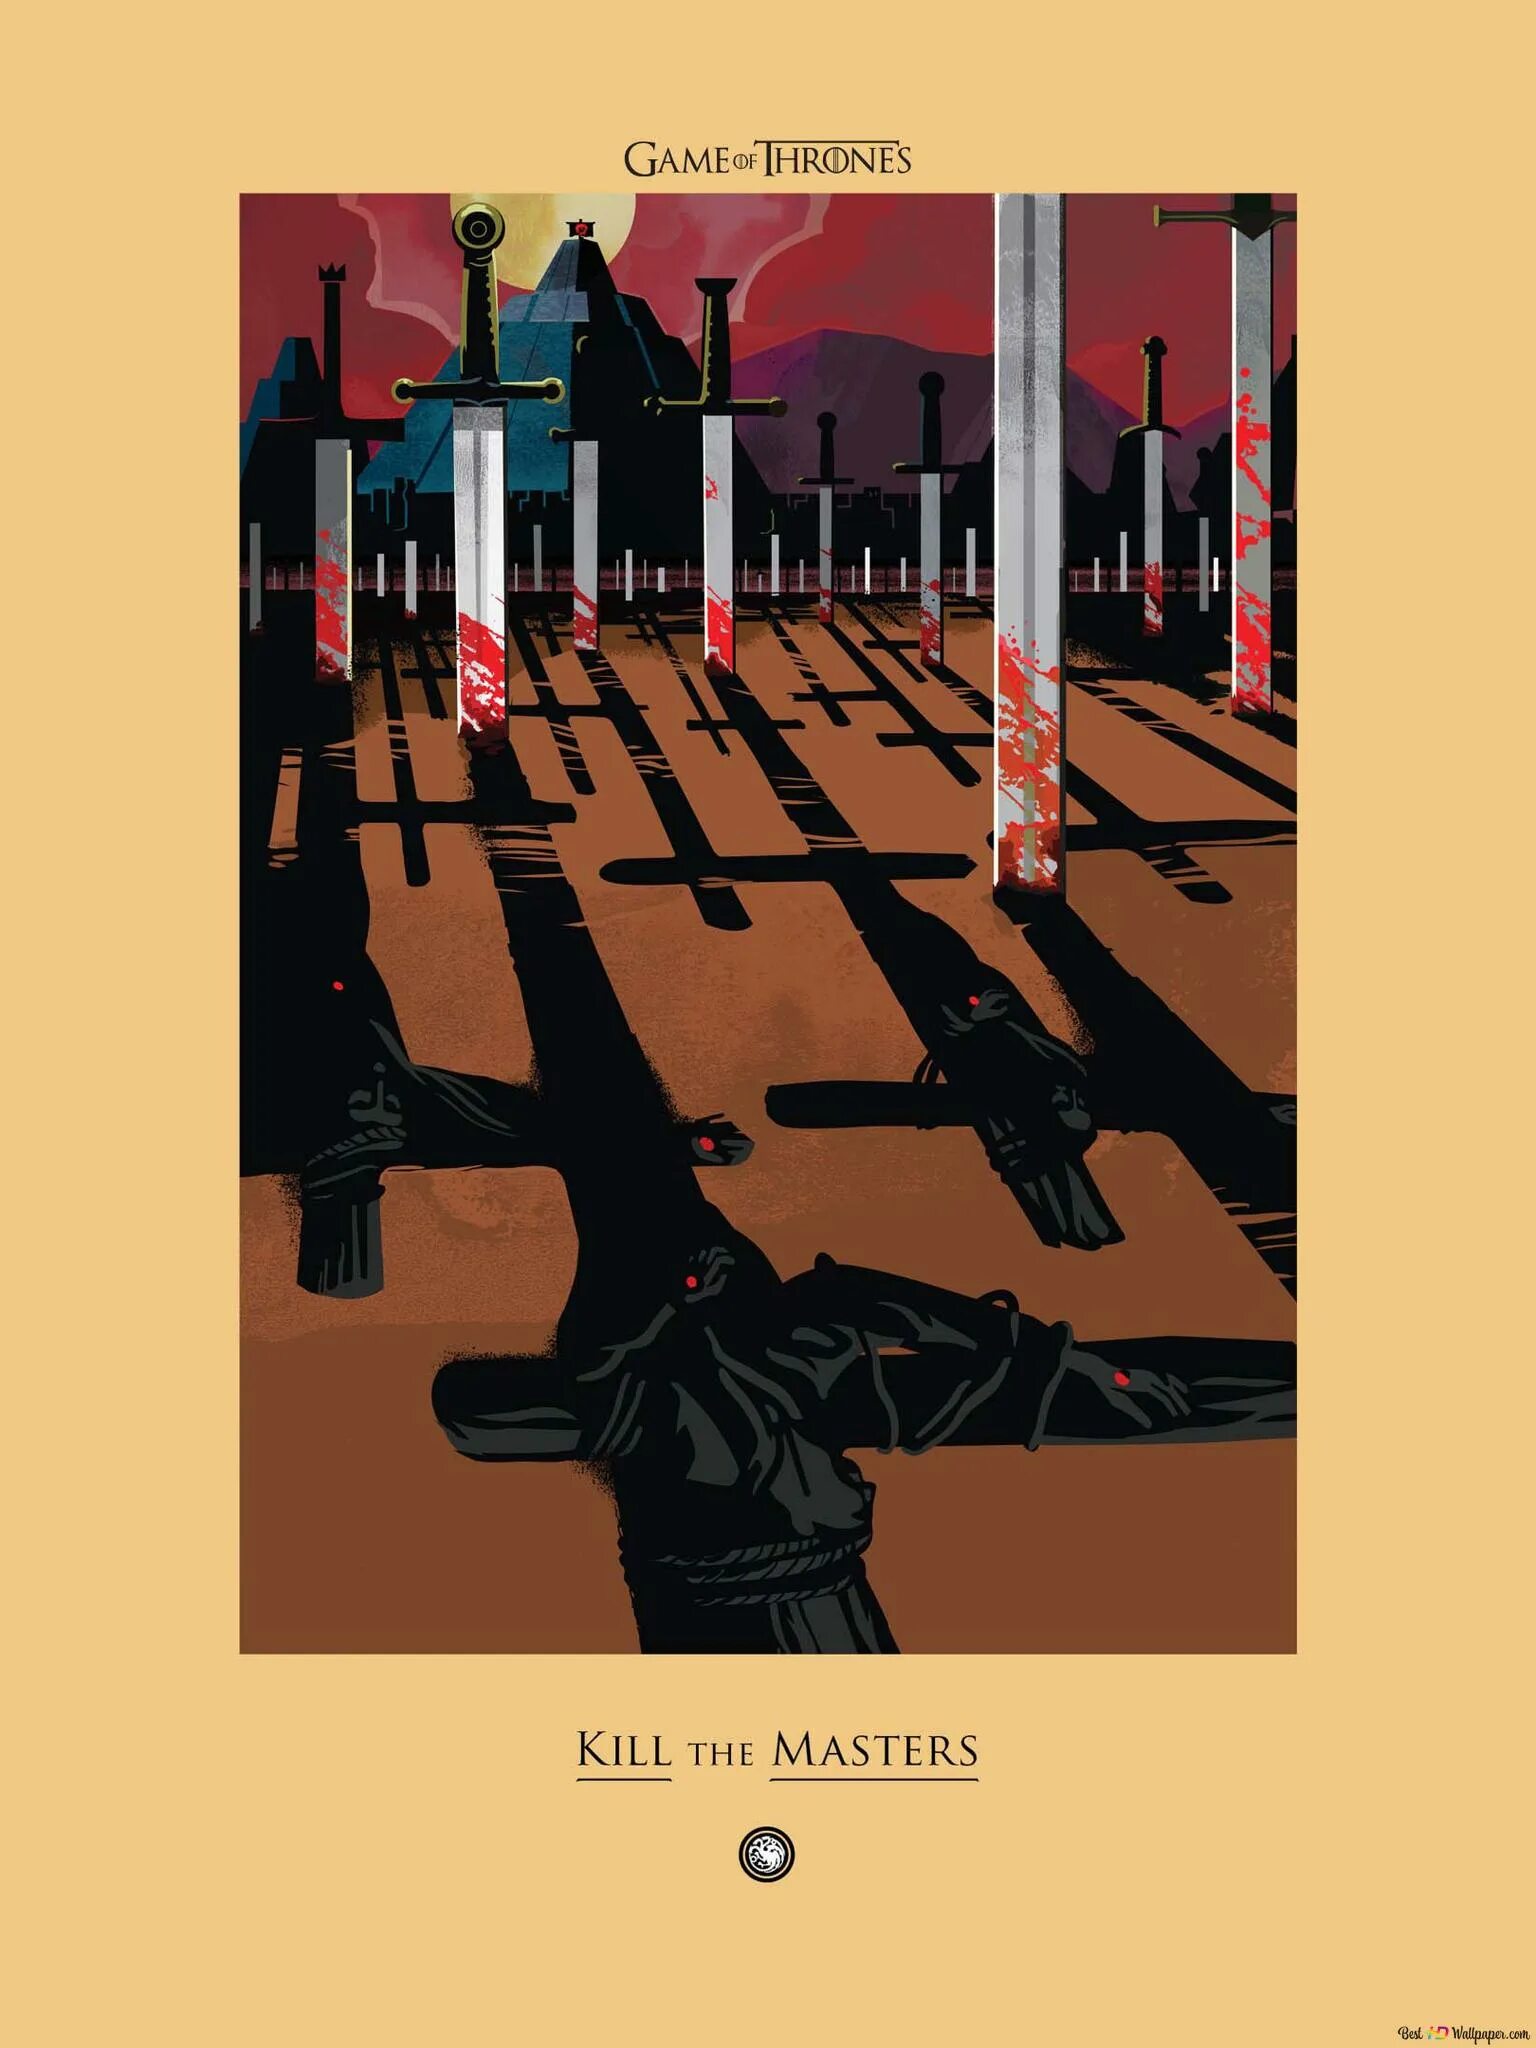 Kill masters. Смерть диктатору плакат. Kill the Masters. Постер "звезда смерти".